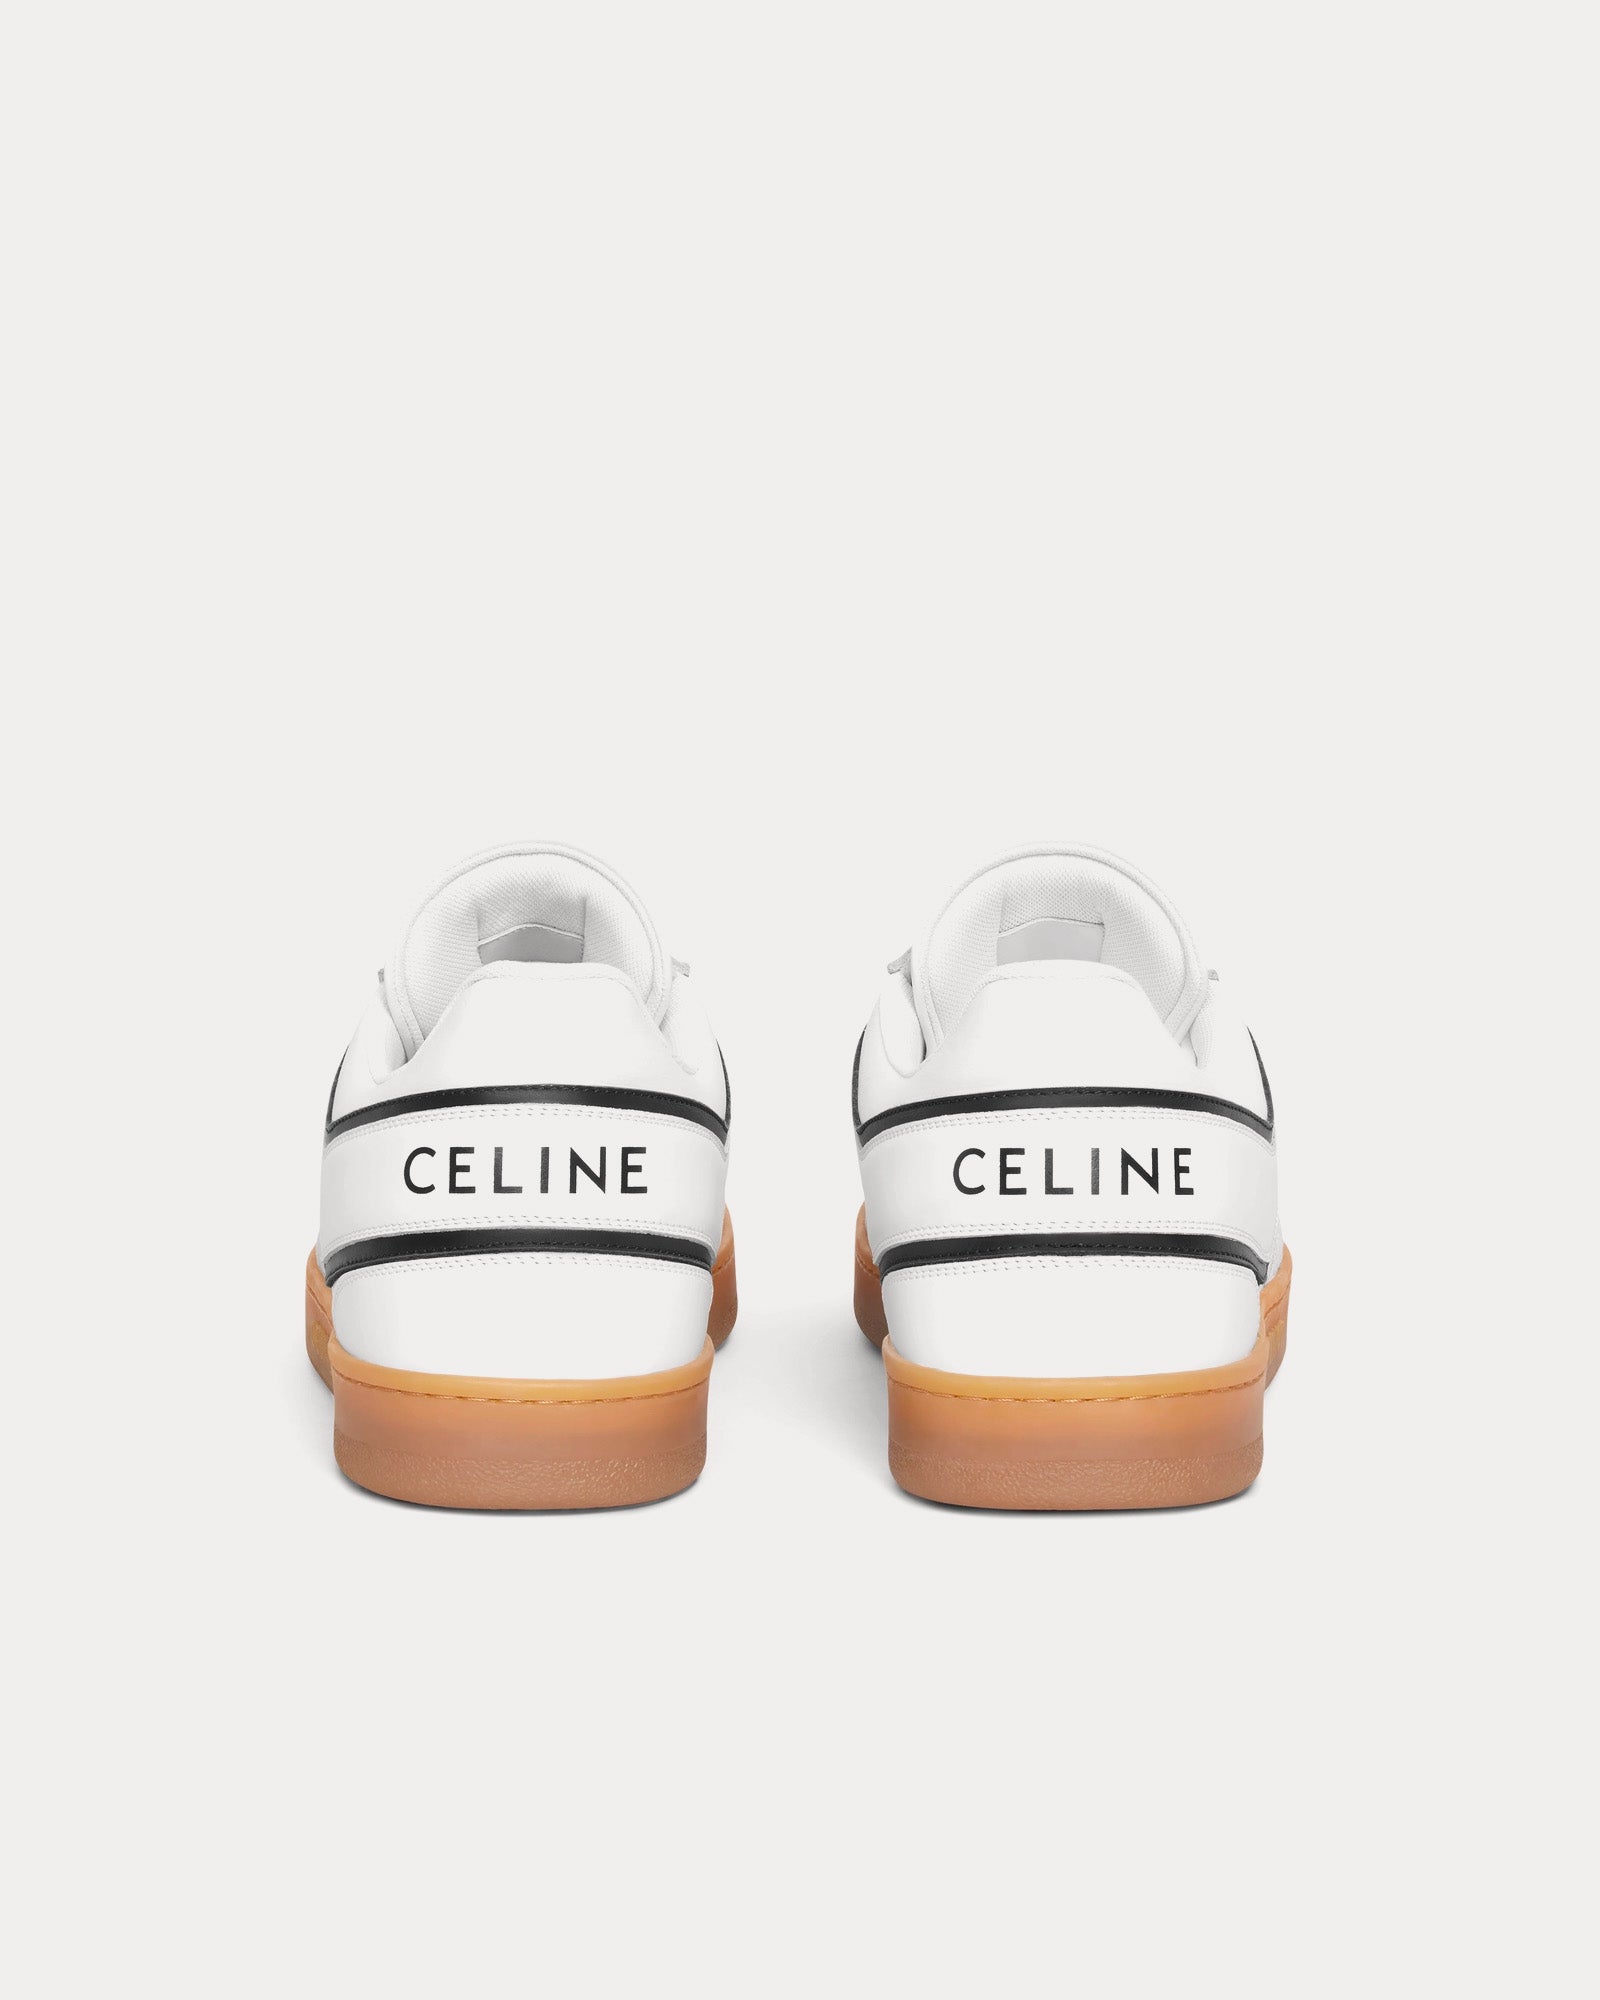 Celine - CT-10 Lace-Up Suede & Calfskin Optic White / Grey / Black / Beige Low Top Sneakers